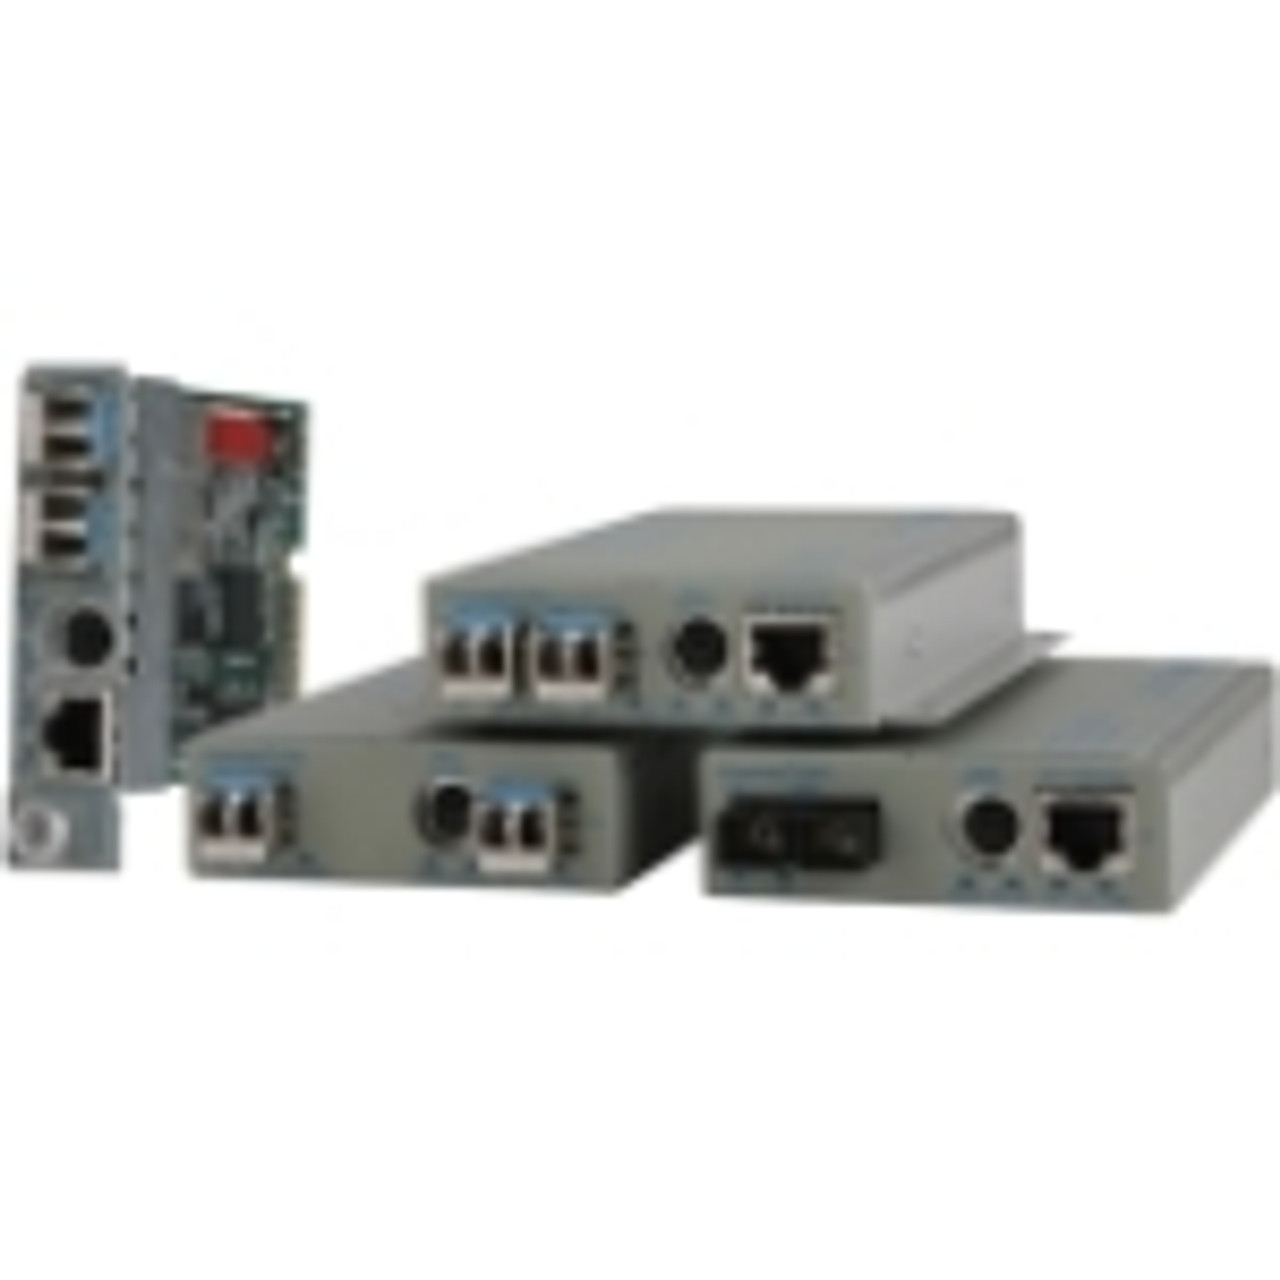 8975P-0-FW Omnitron Systems iConverter GM3 Media Converter 1 x Network (RJ-45) 10/100/1000Base-T, 1000Base-X 2 x Expansion Slots 2 x SFP Slots Wall Mountable